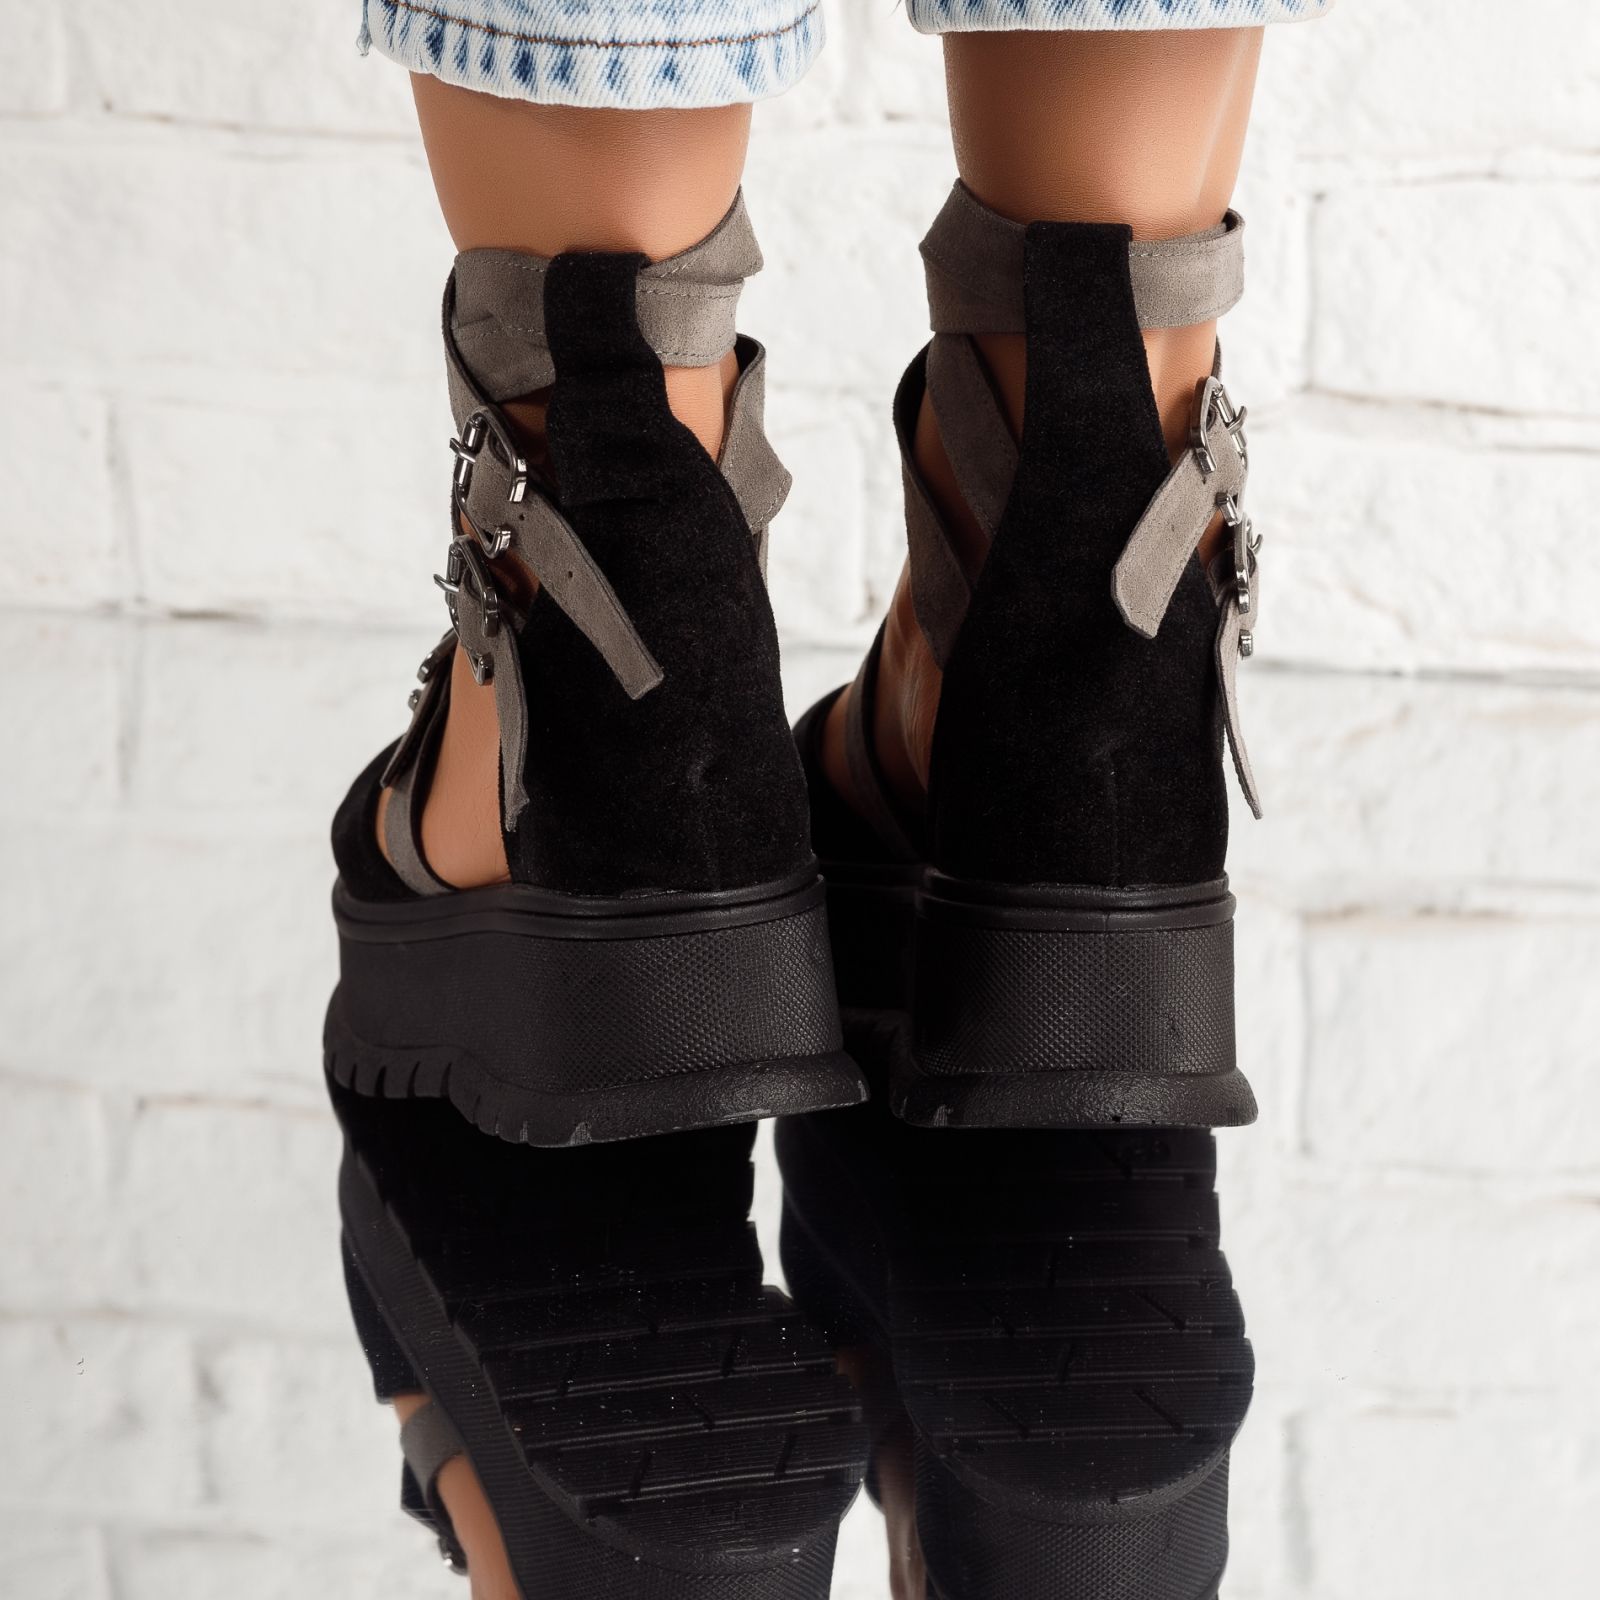 Alkalmi cipő fekete/szürke Luna #5076M